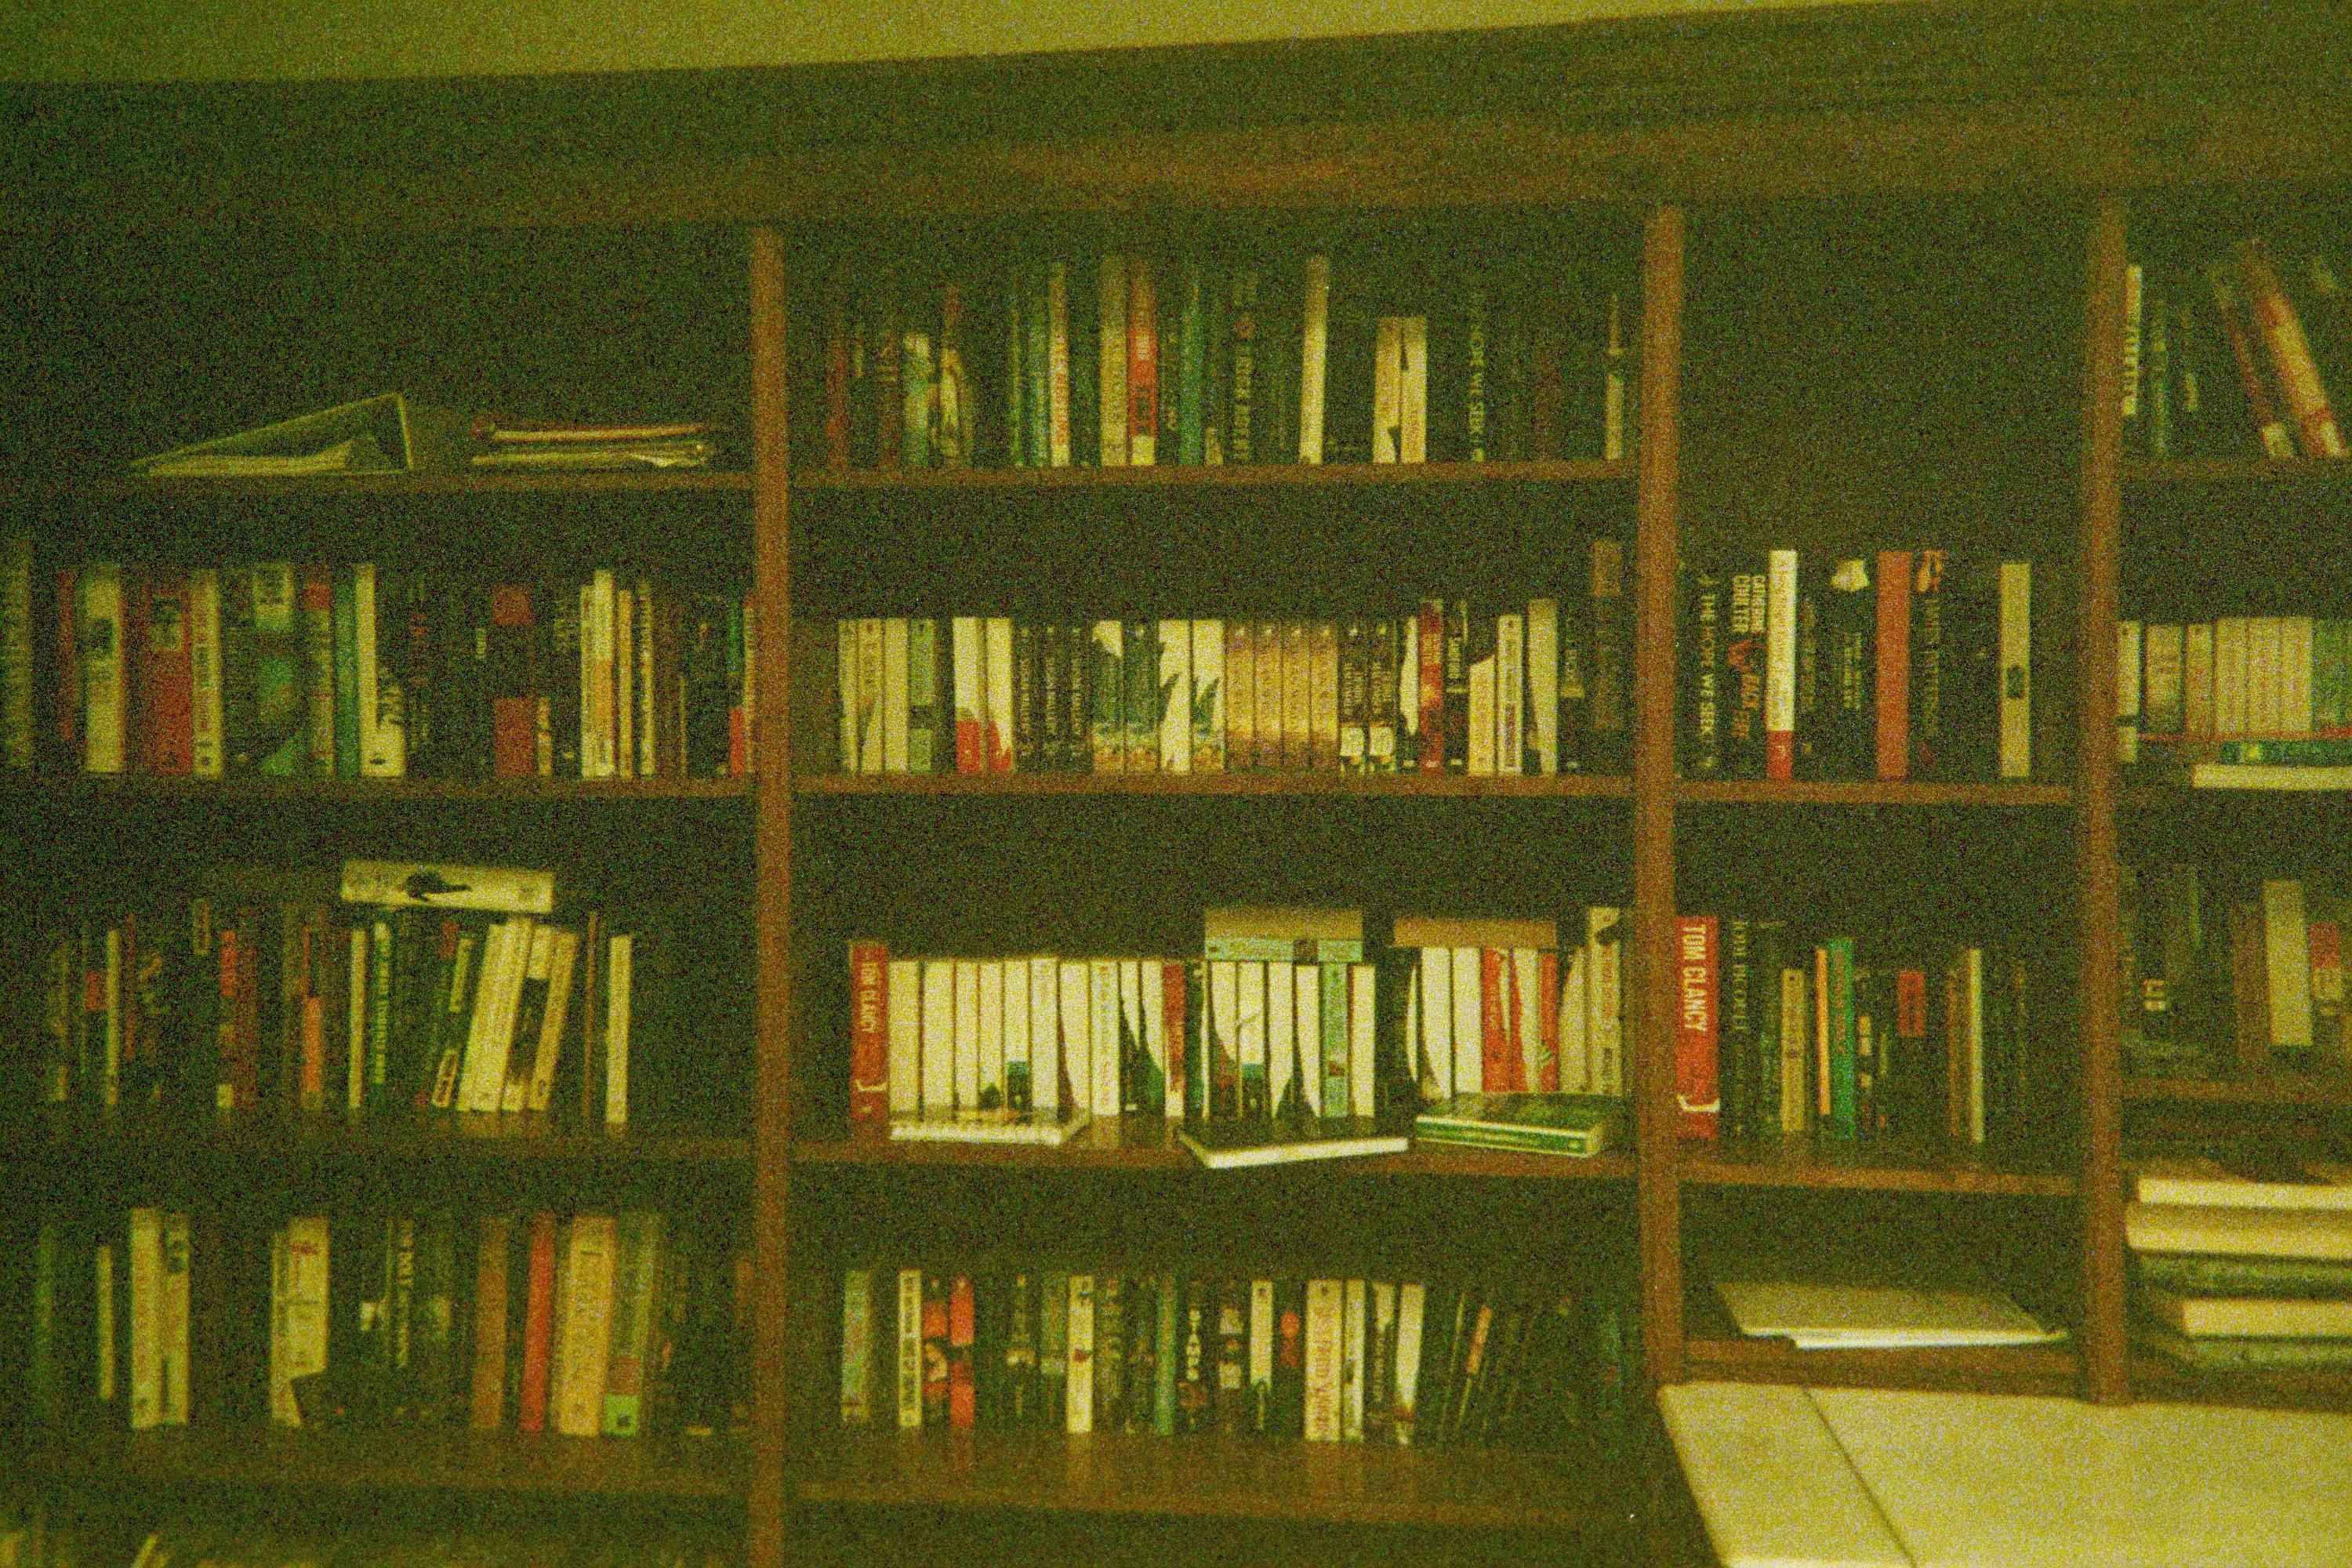 TROSA Bookshelf